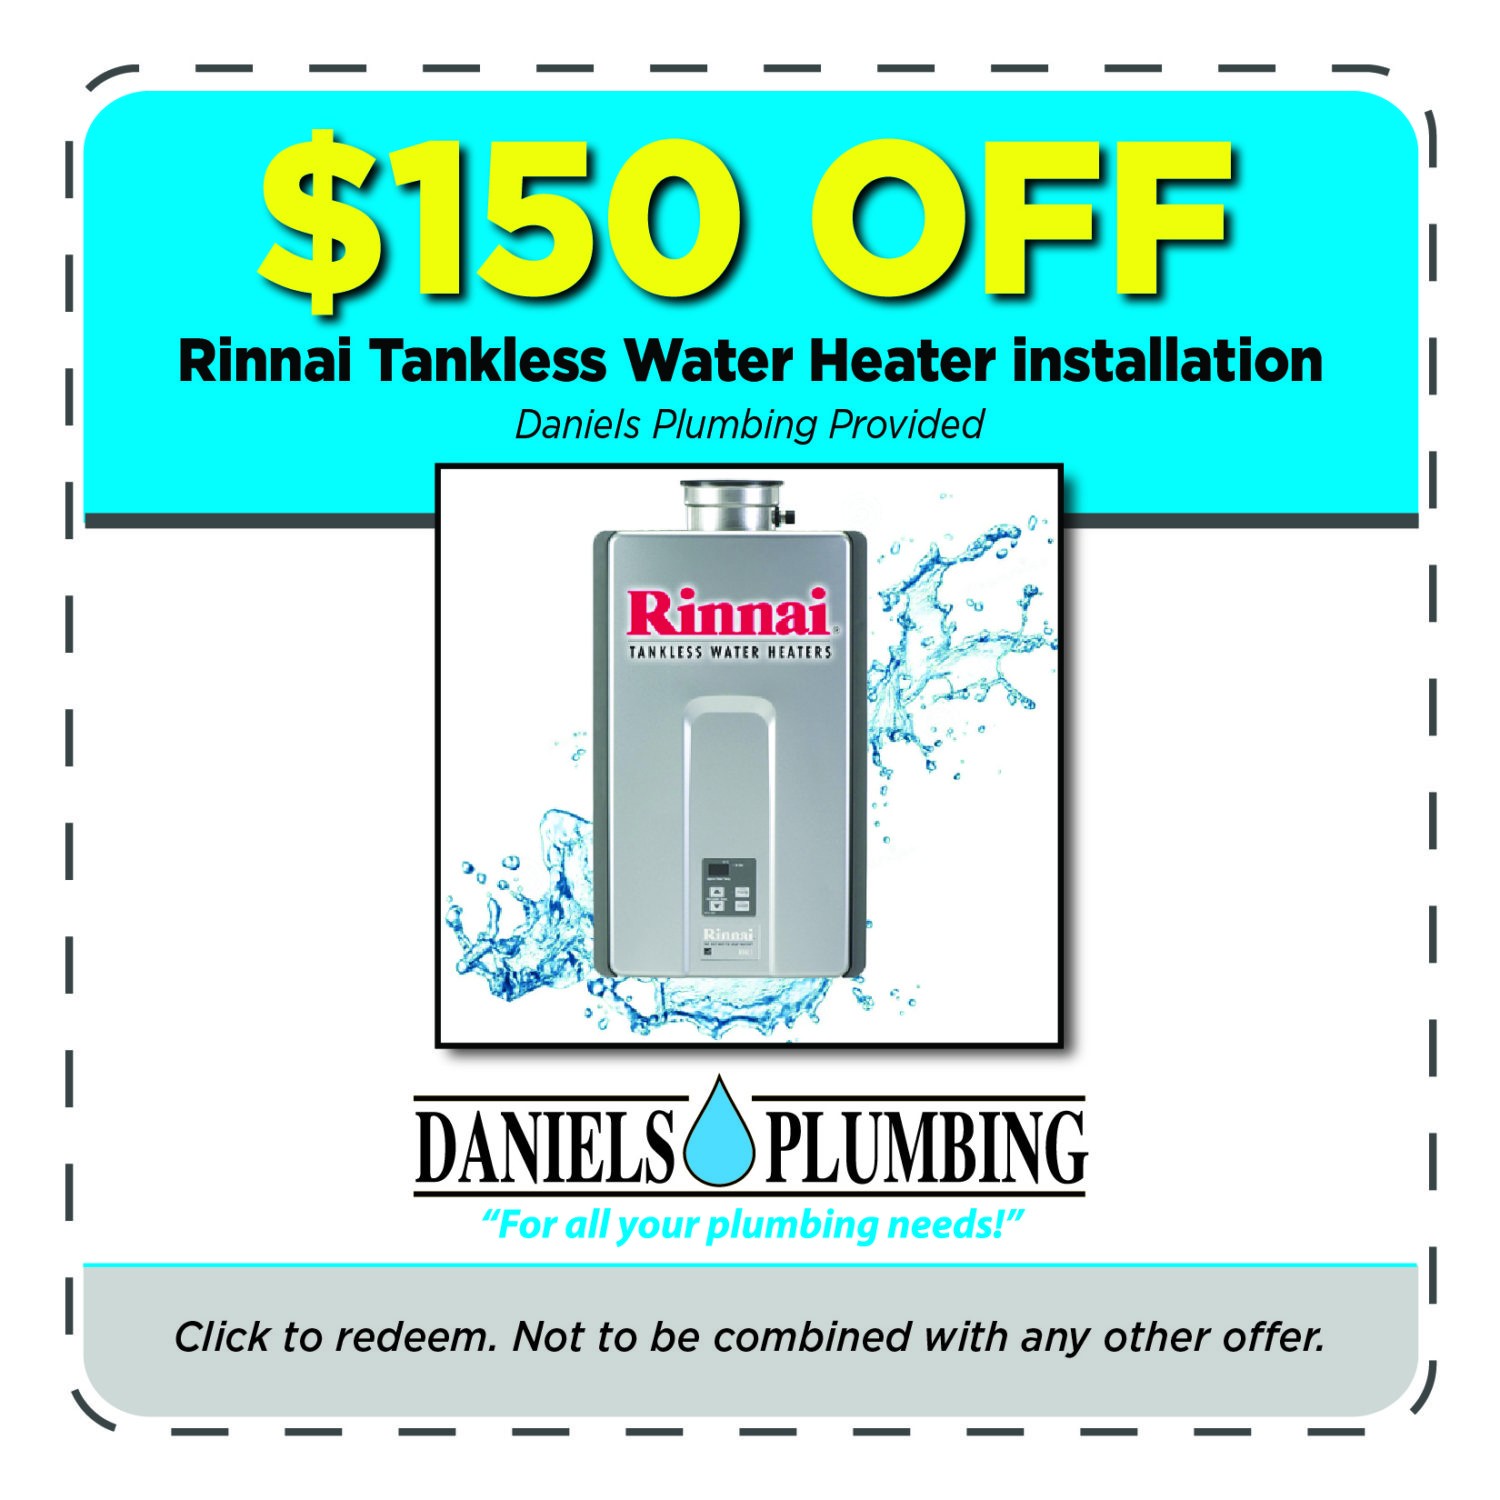 22-2 1124 Daniel's Plumbing Coupons - $150 Off Rinnai Tankless Water Heater-03